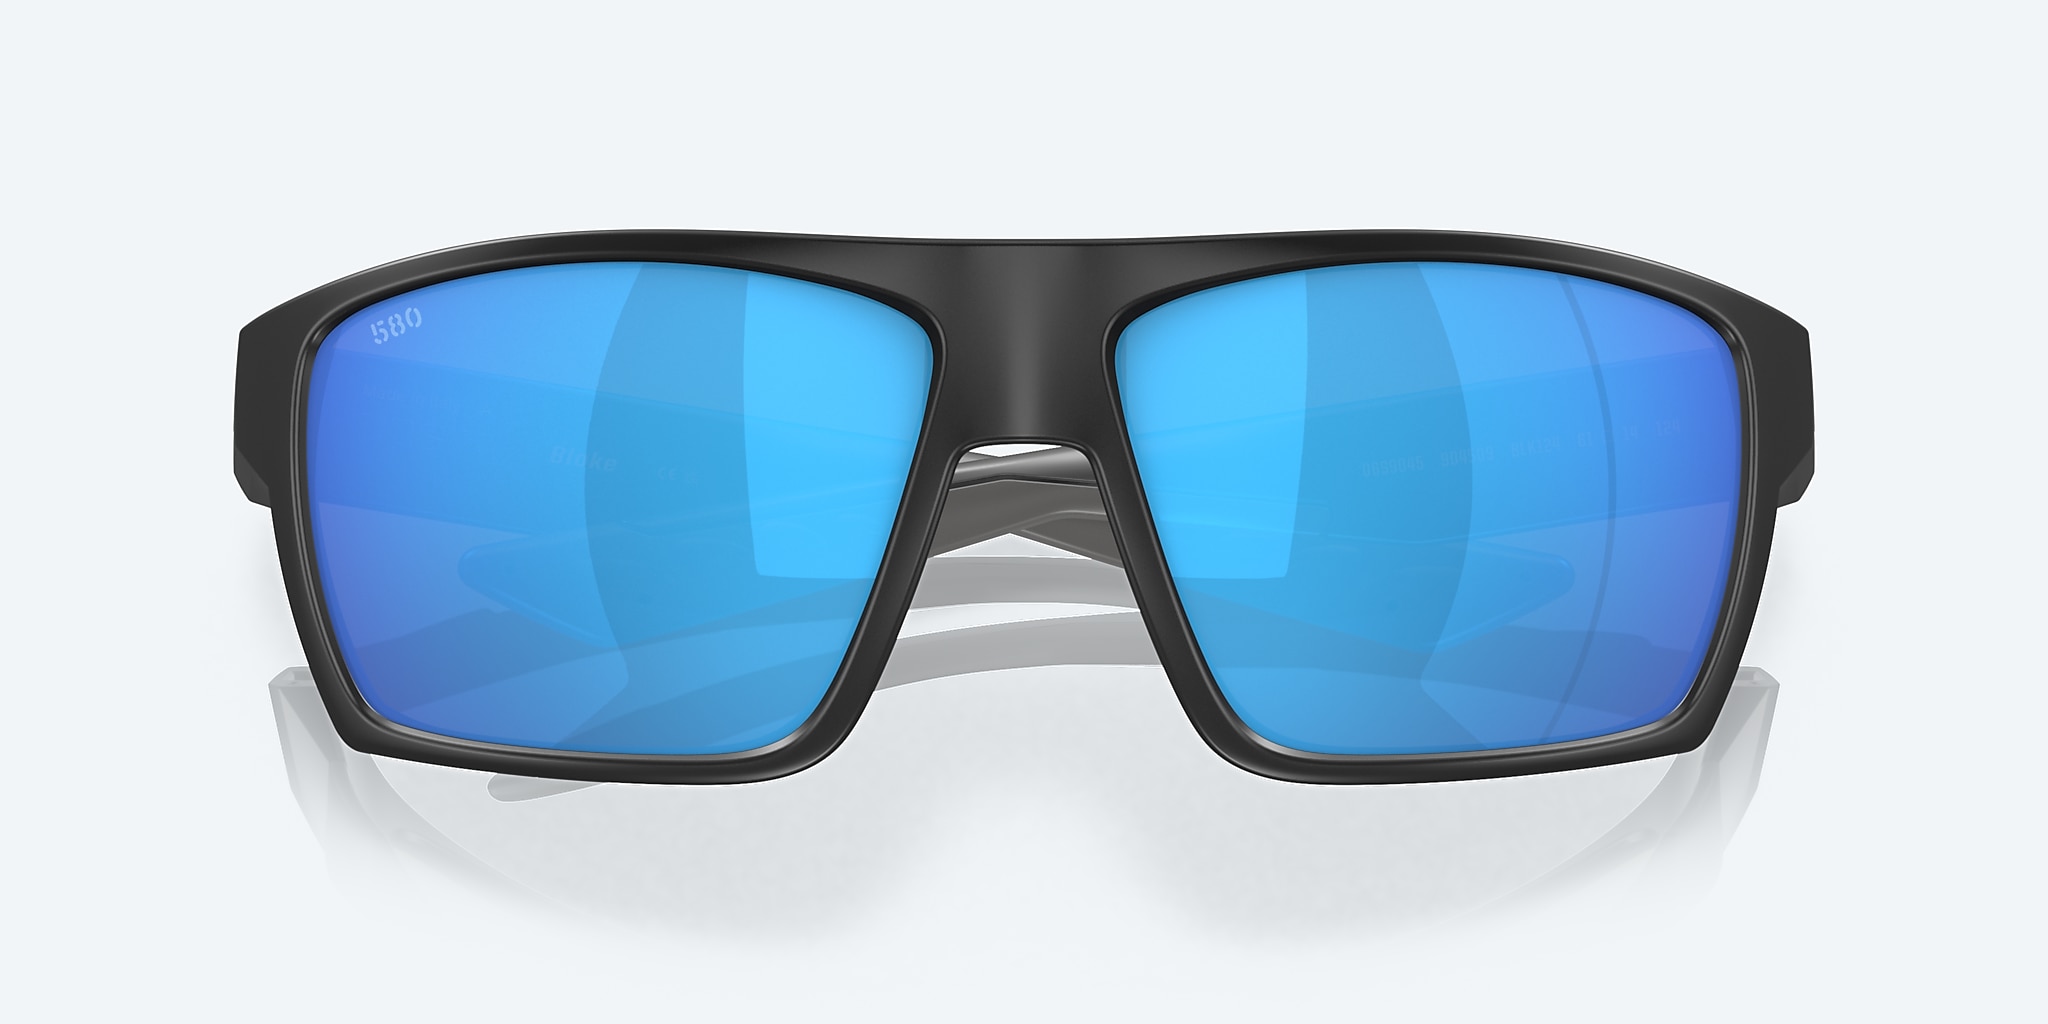  Seatek Pablo Blue Mirror Polarized Sunglasses Best